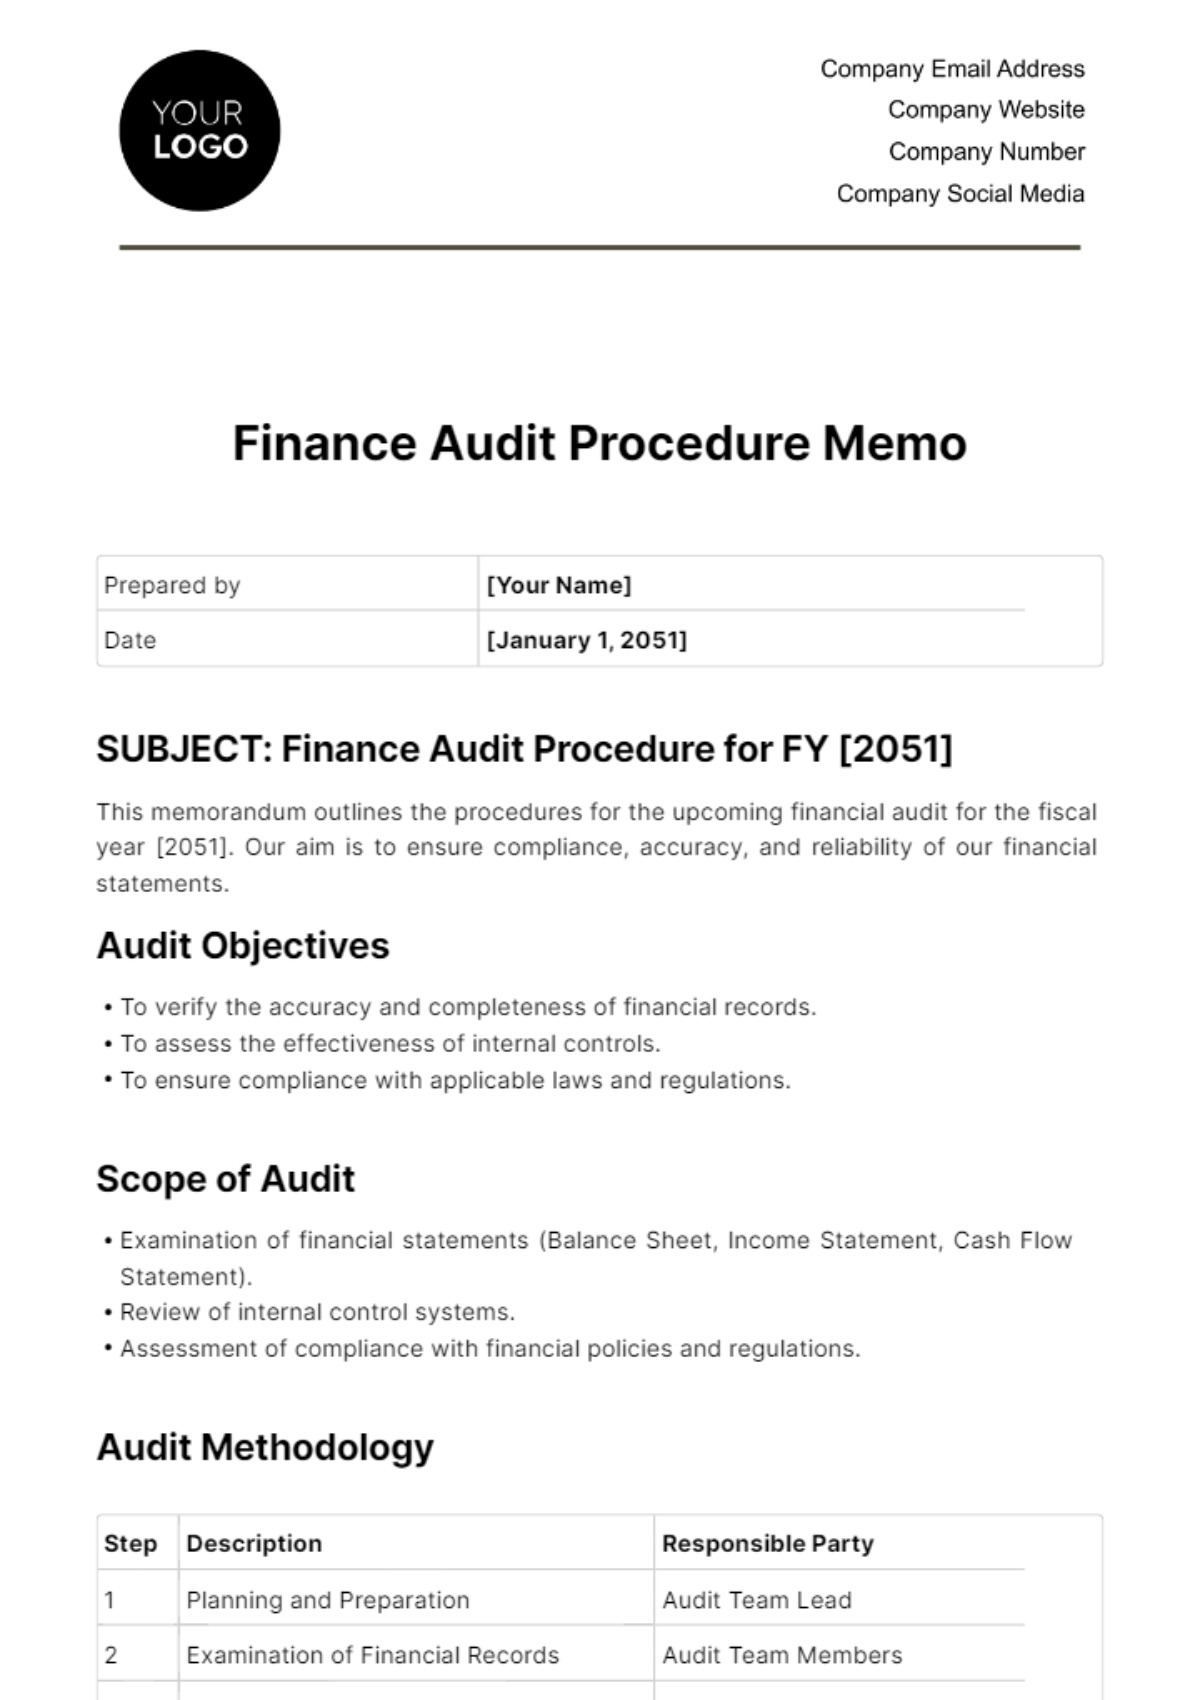 Finance Audit Procedure Memo Template